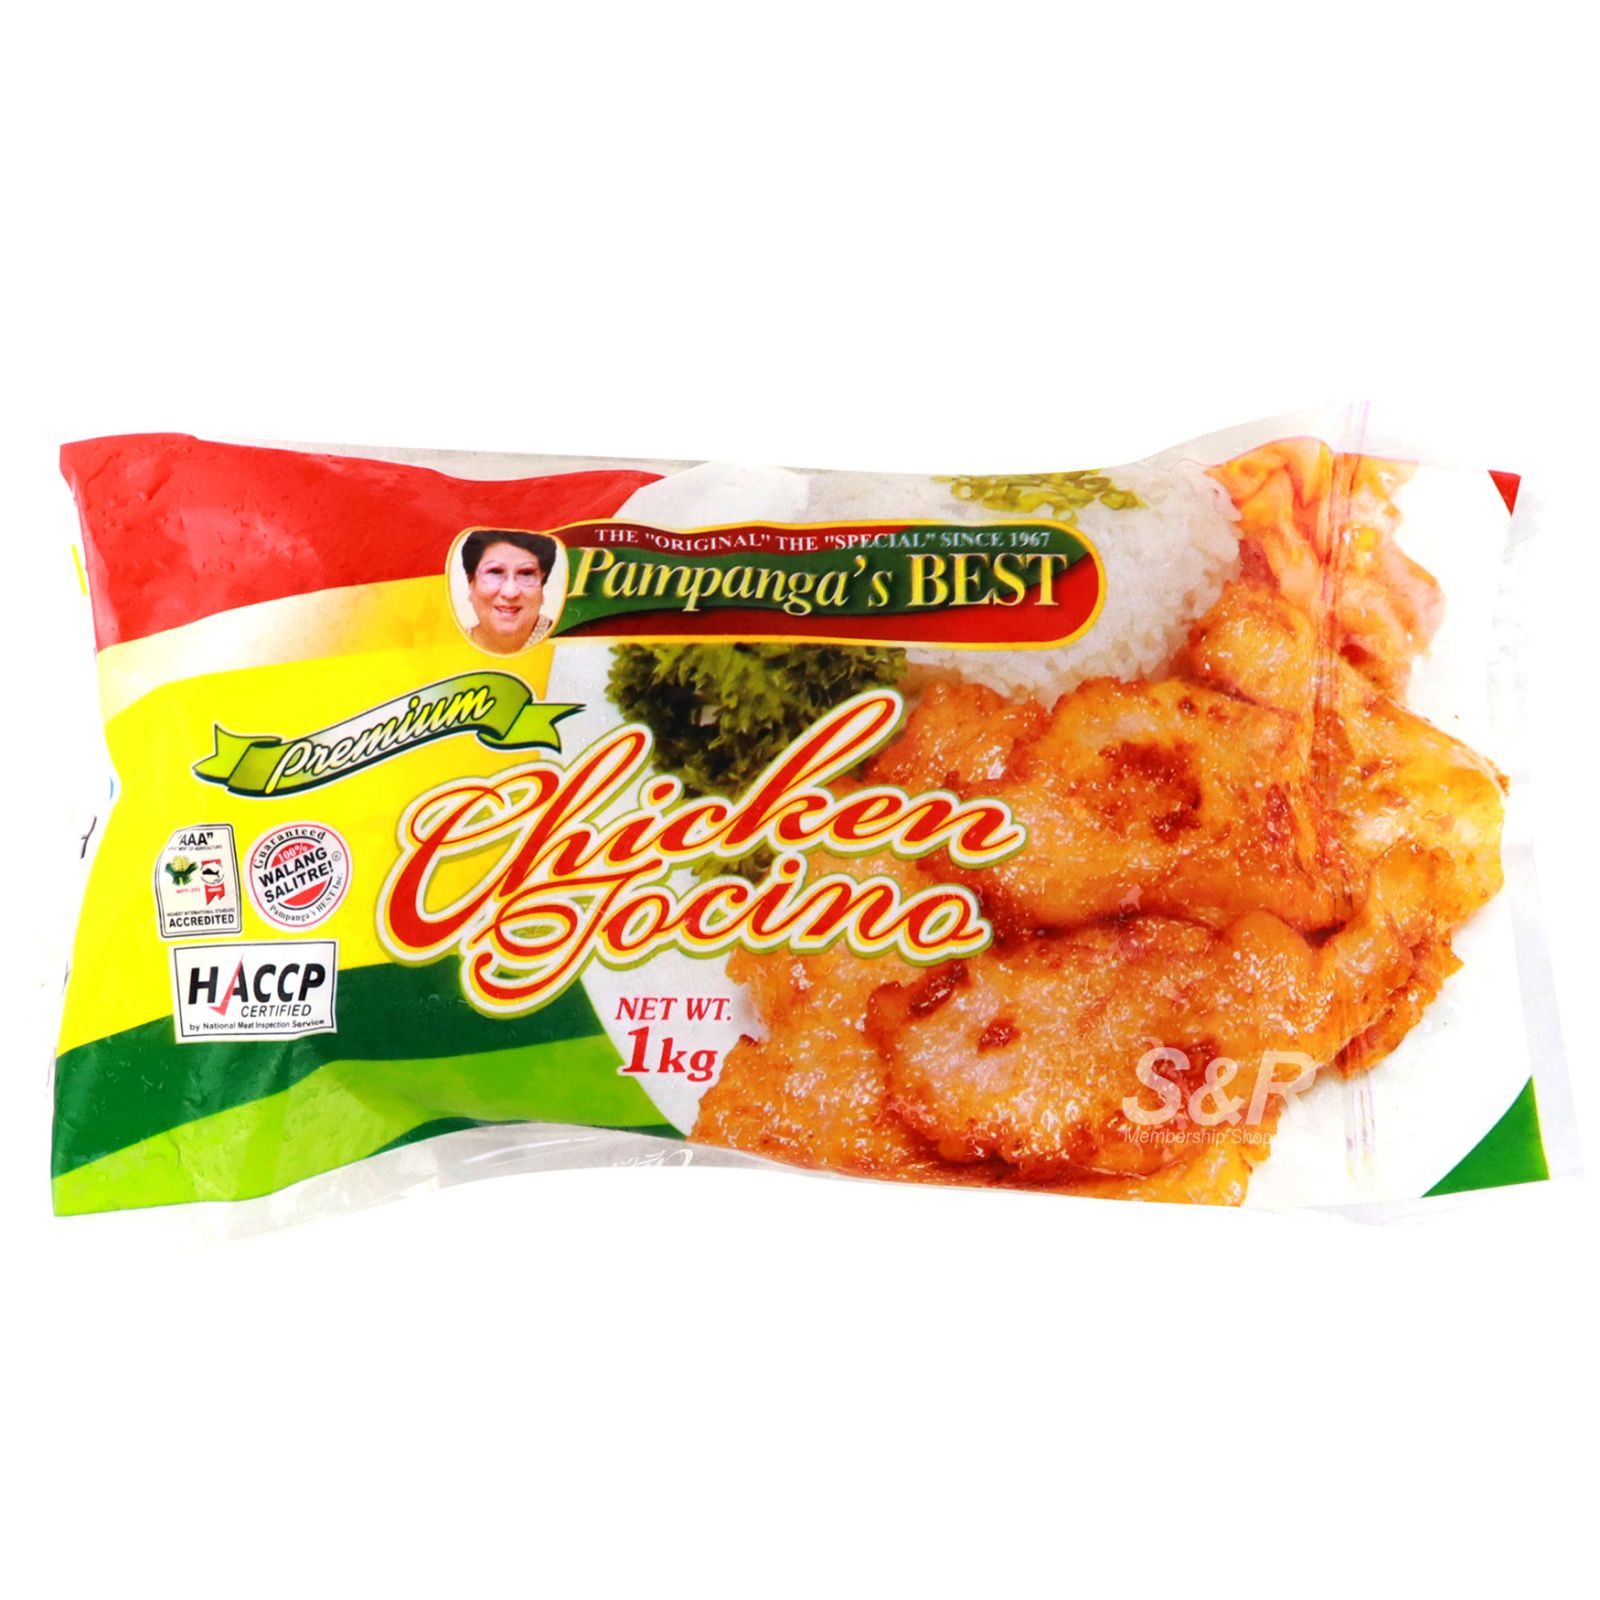 Pampanga's Best Chicken Tocino 1kg